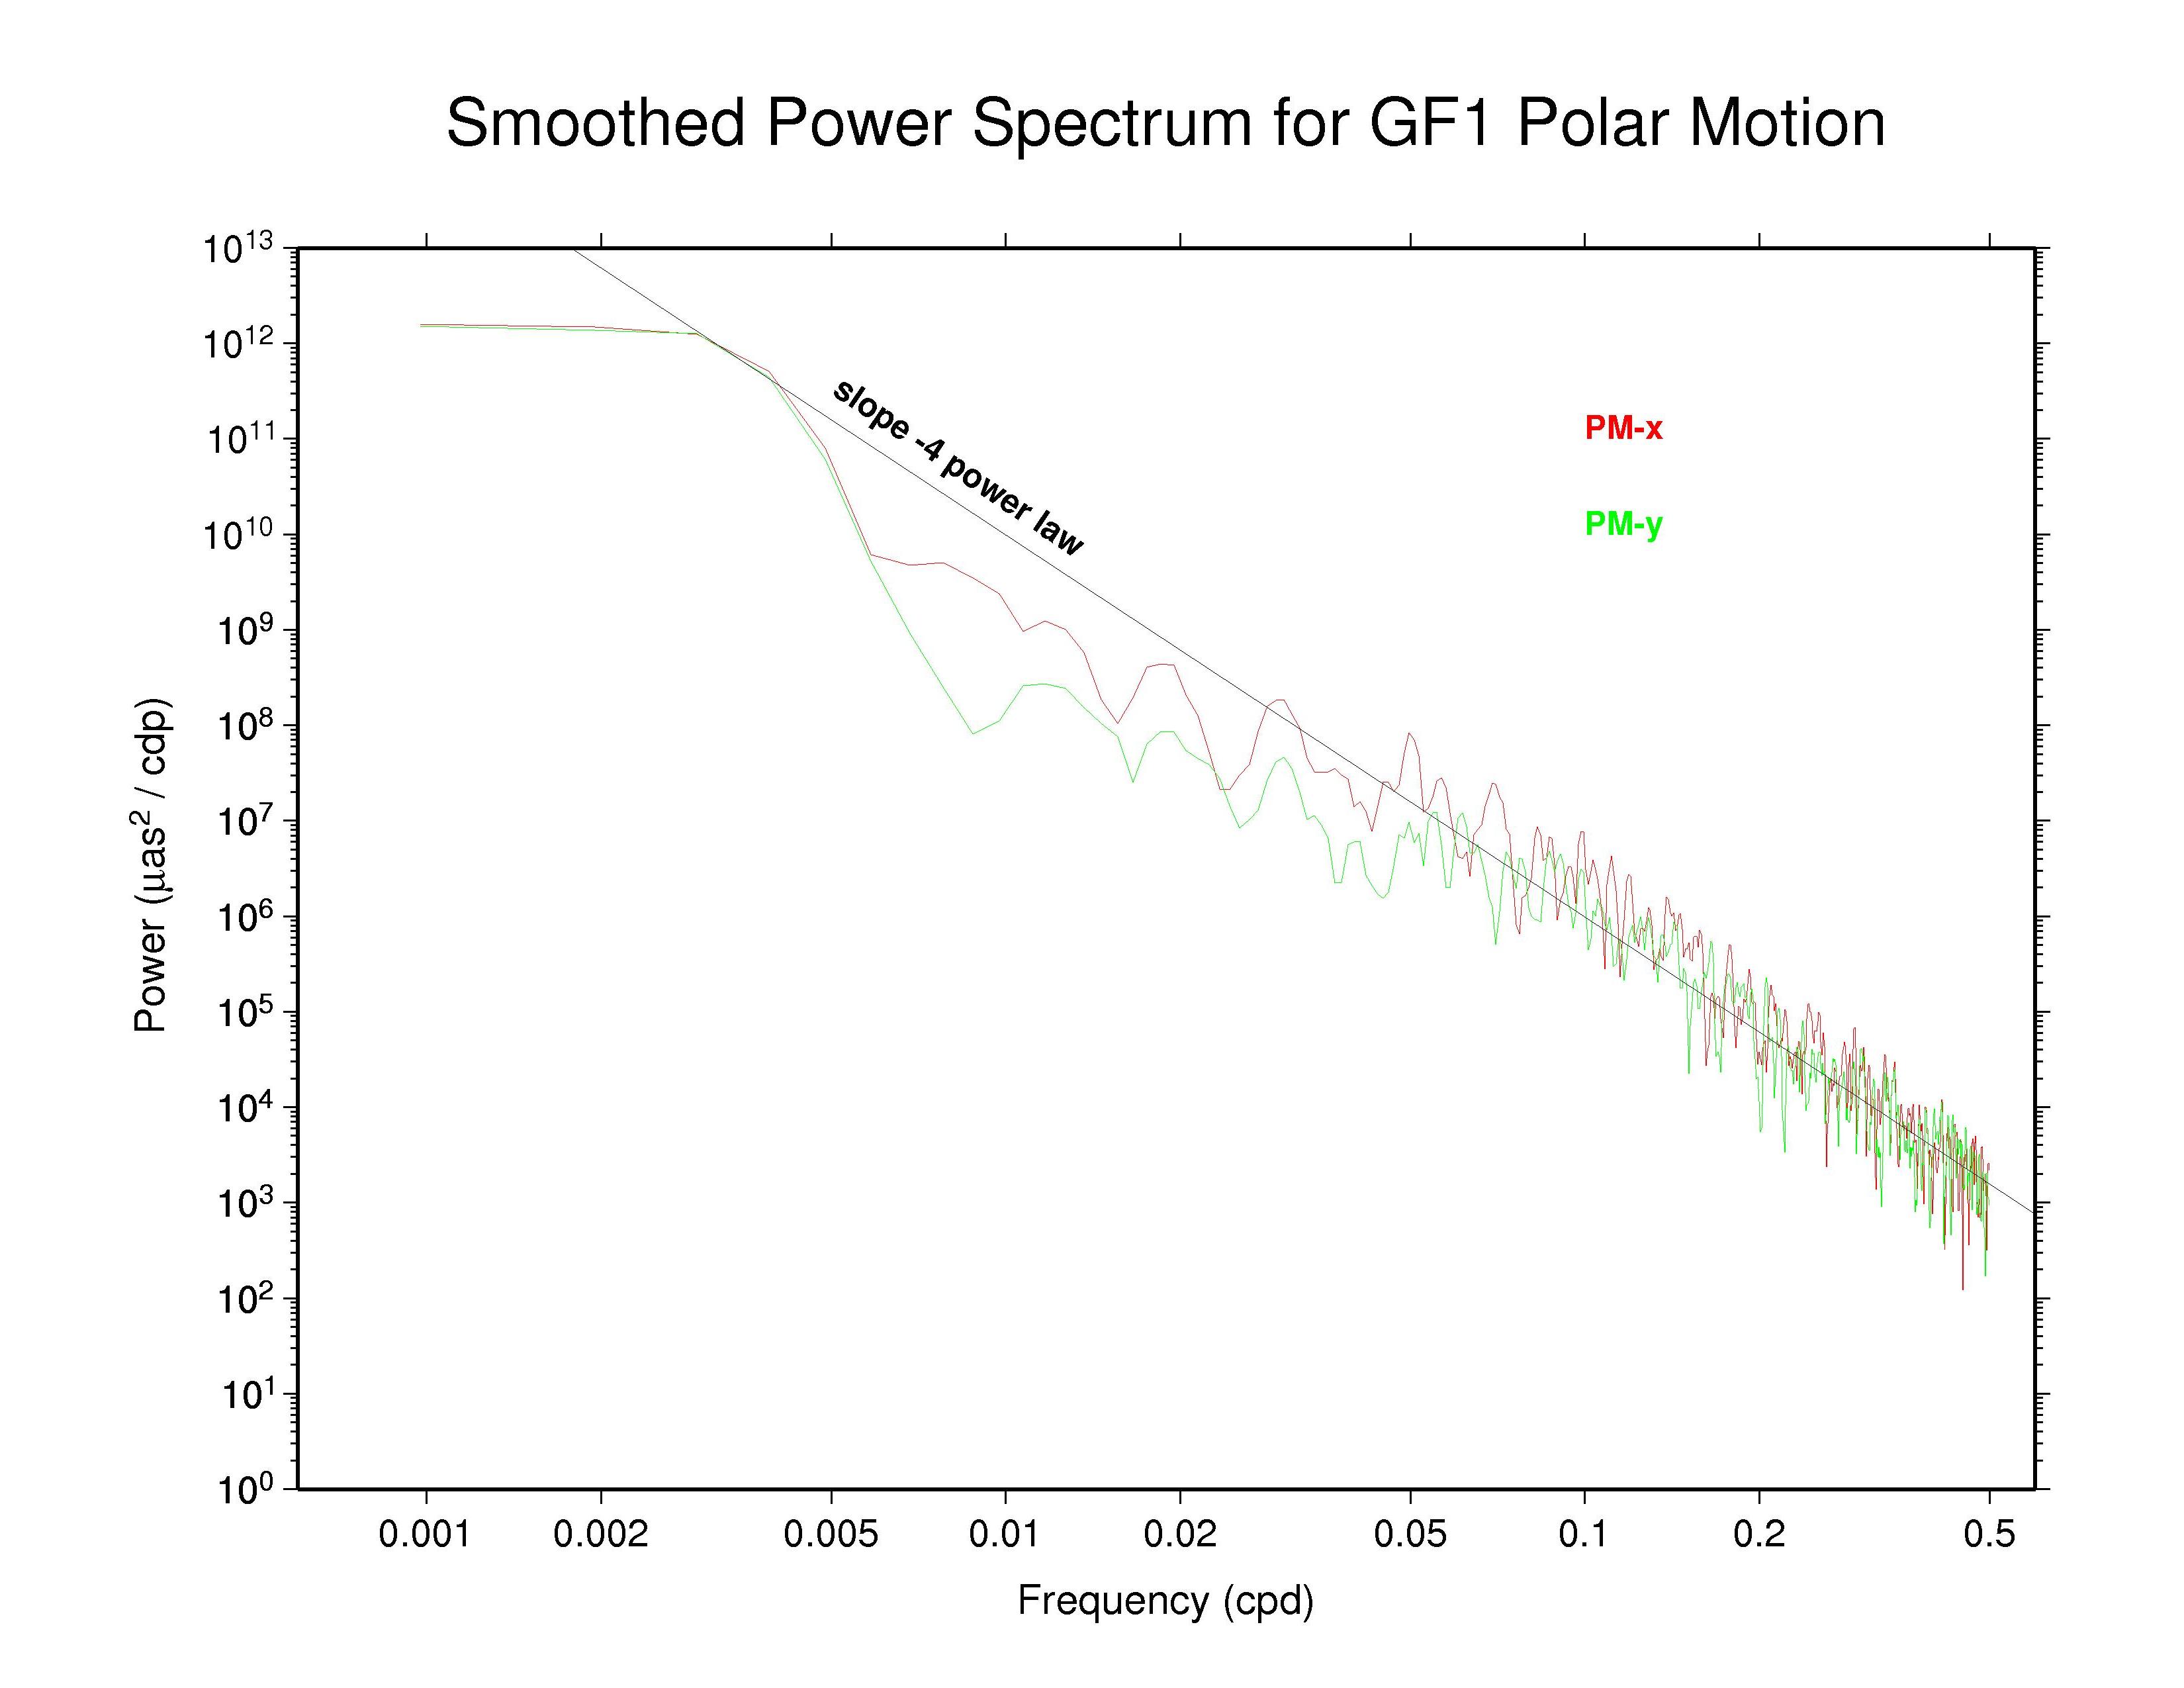 GFZ polar motion spectra